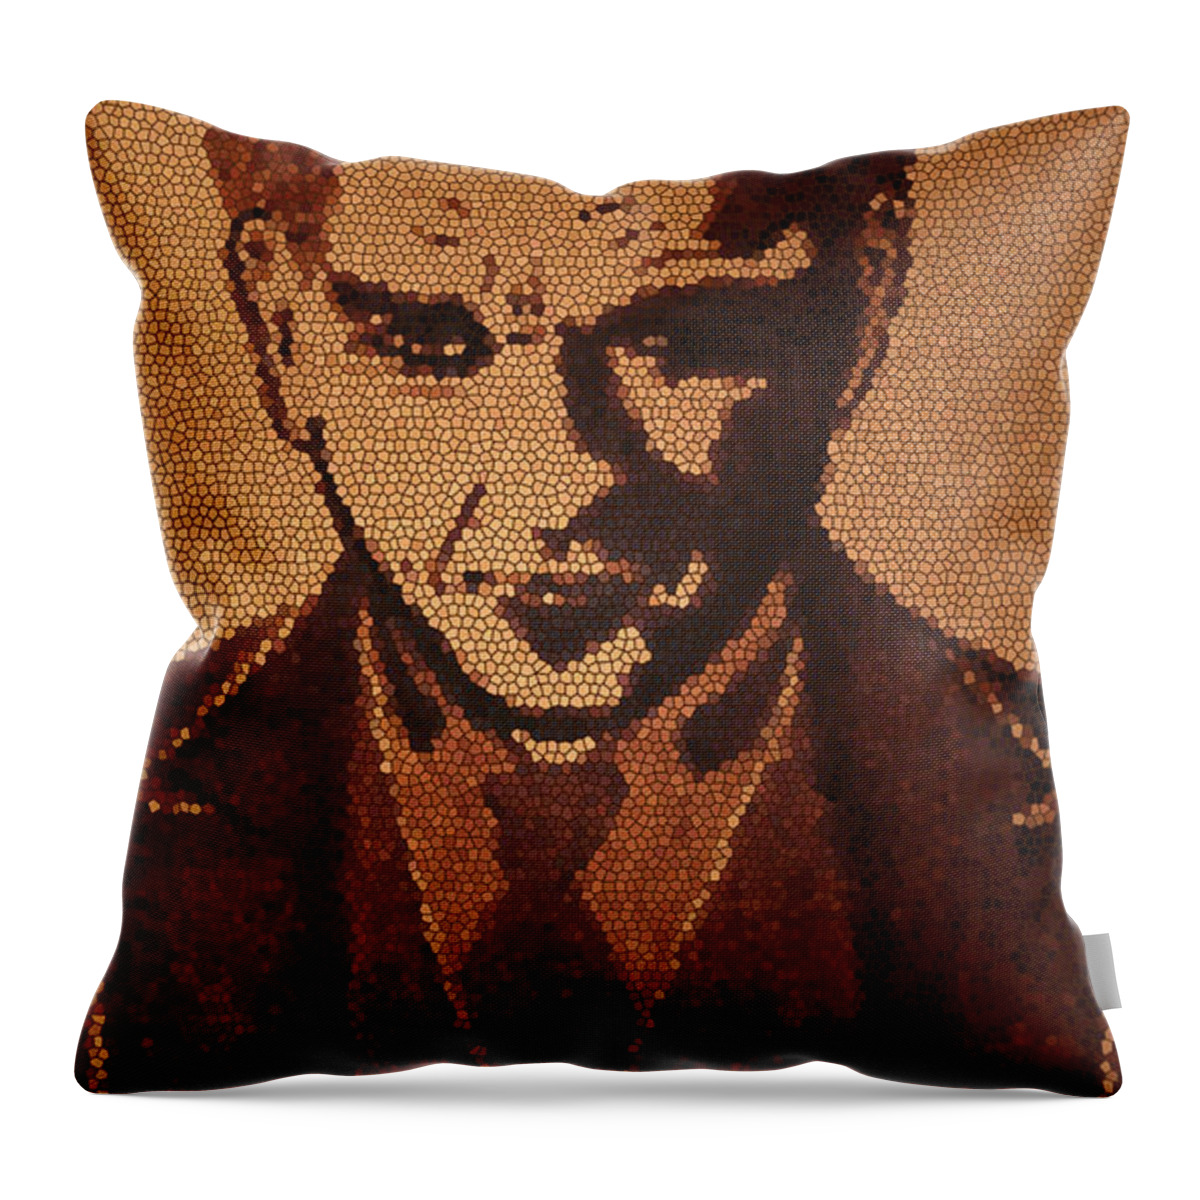 Mustafa Kemal Ataturk Pop Art Throw Pillow featuring the painting Great Mustafa Kemal Ataturk by Georgeta Blanaru